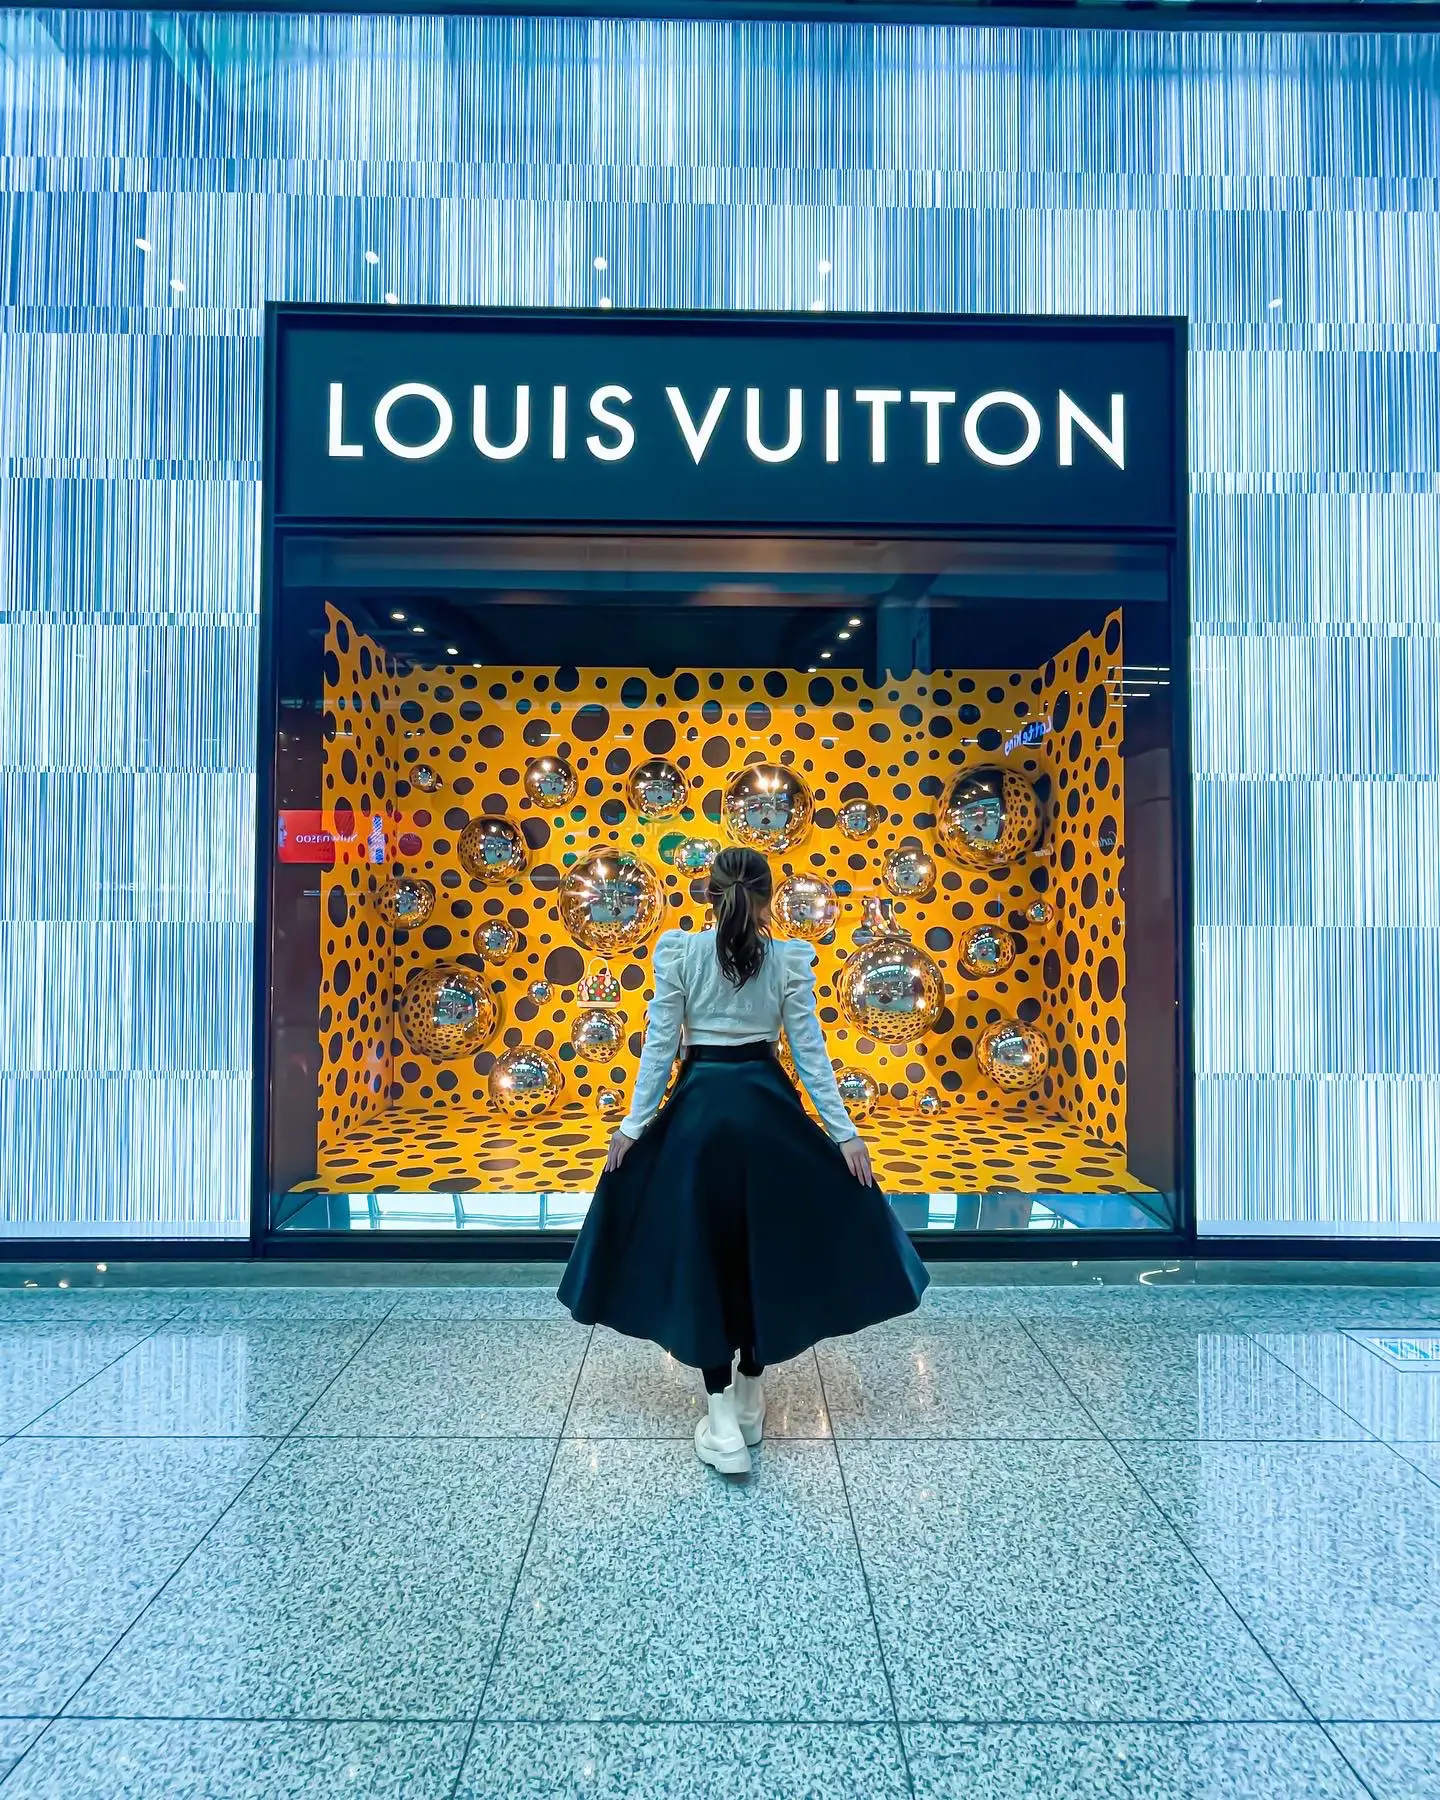 Louis Vuitton x Yayoi Kusama: A Fresh Take or Careless Mistake